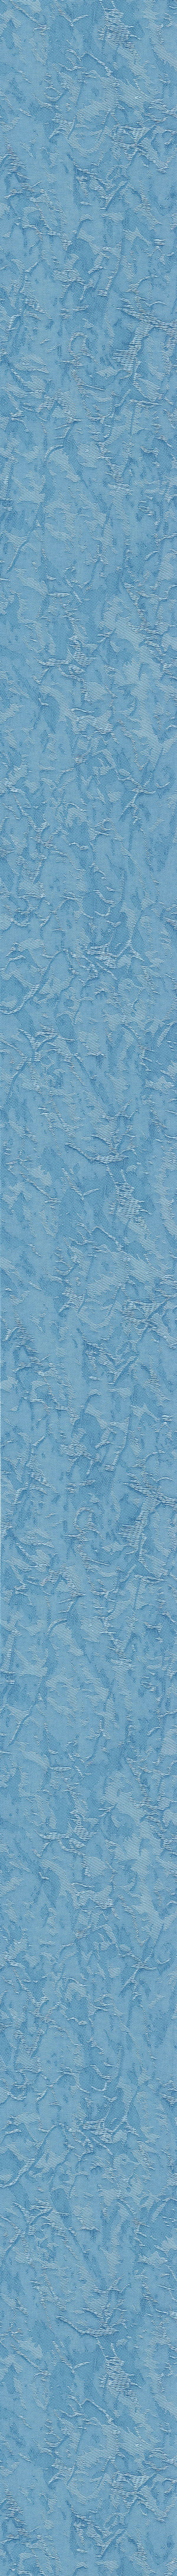 Ткань-Шёлк-голубой